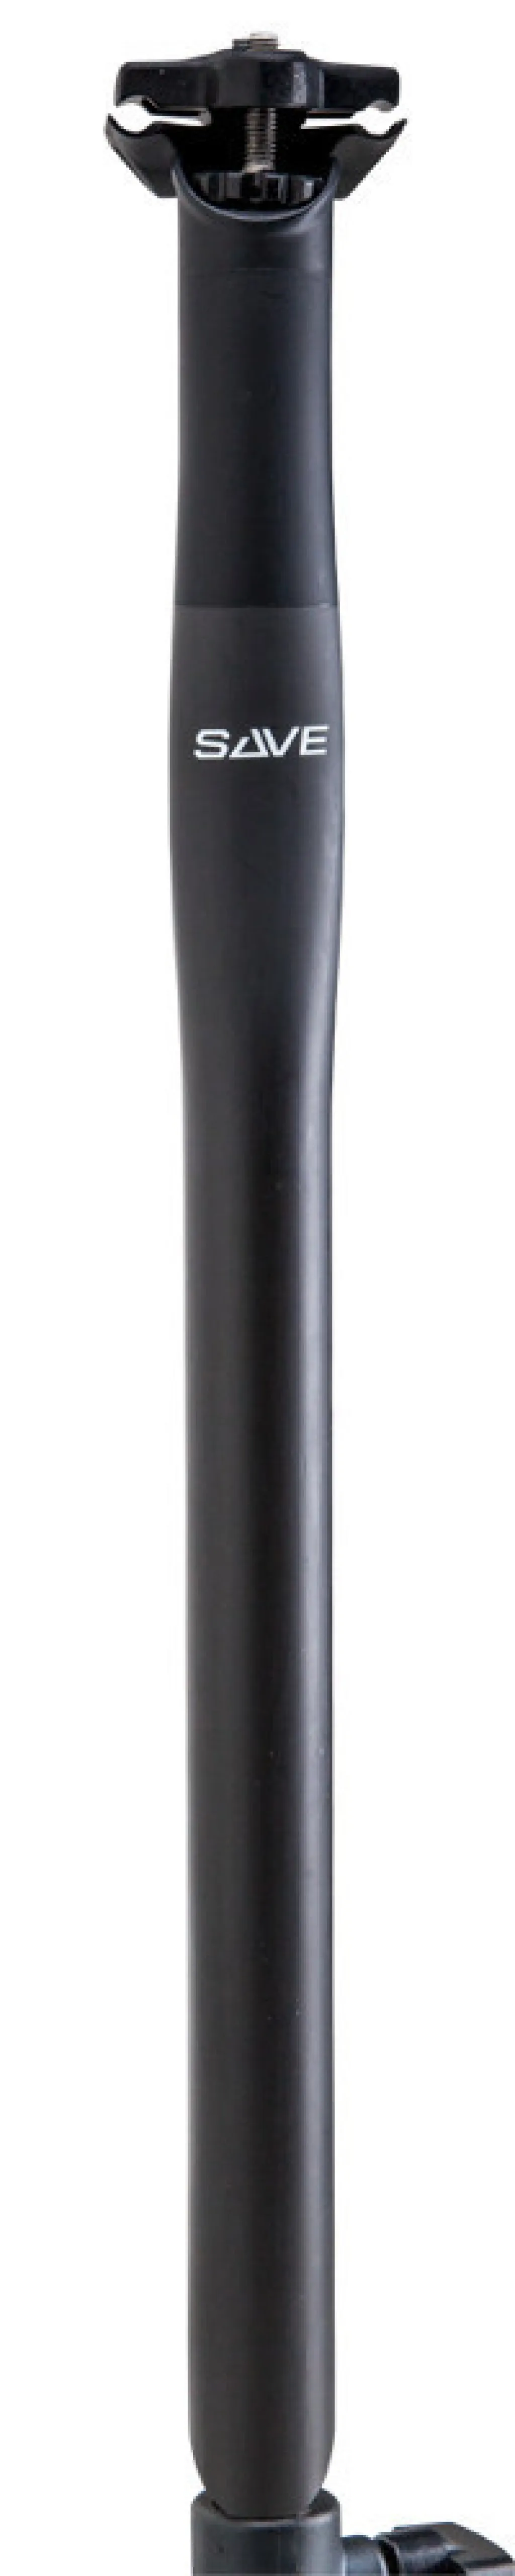 Підсідельна труба Сannondale S.A.V.E. 27.2x420мм карбон, 2 болта, Logo білий